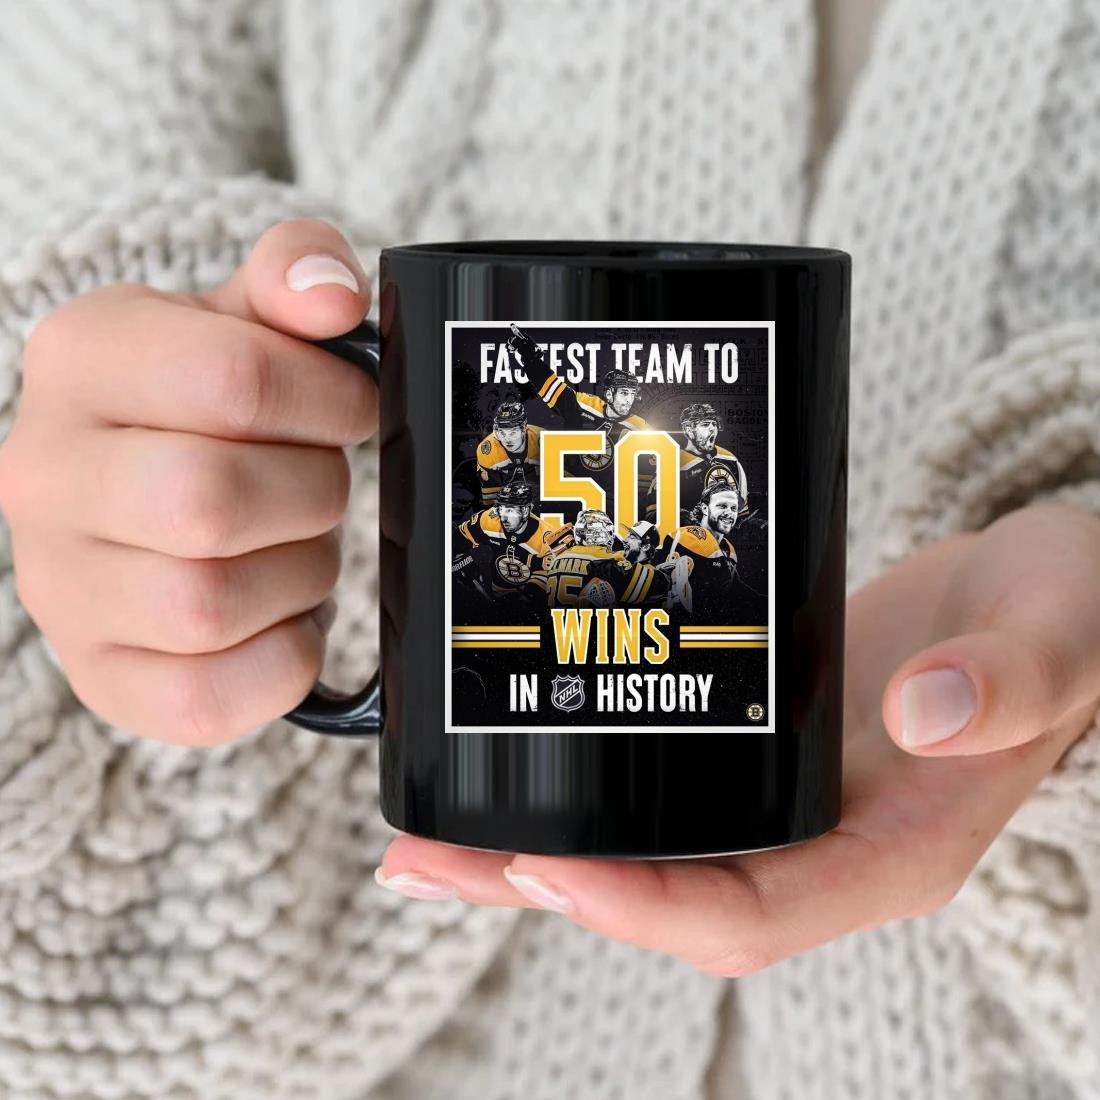 Boston Bruins Fastest Team To 50 Wins In Nhl History Mug nhu.jpg